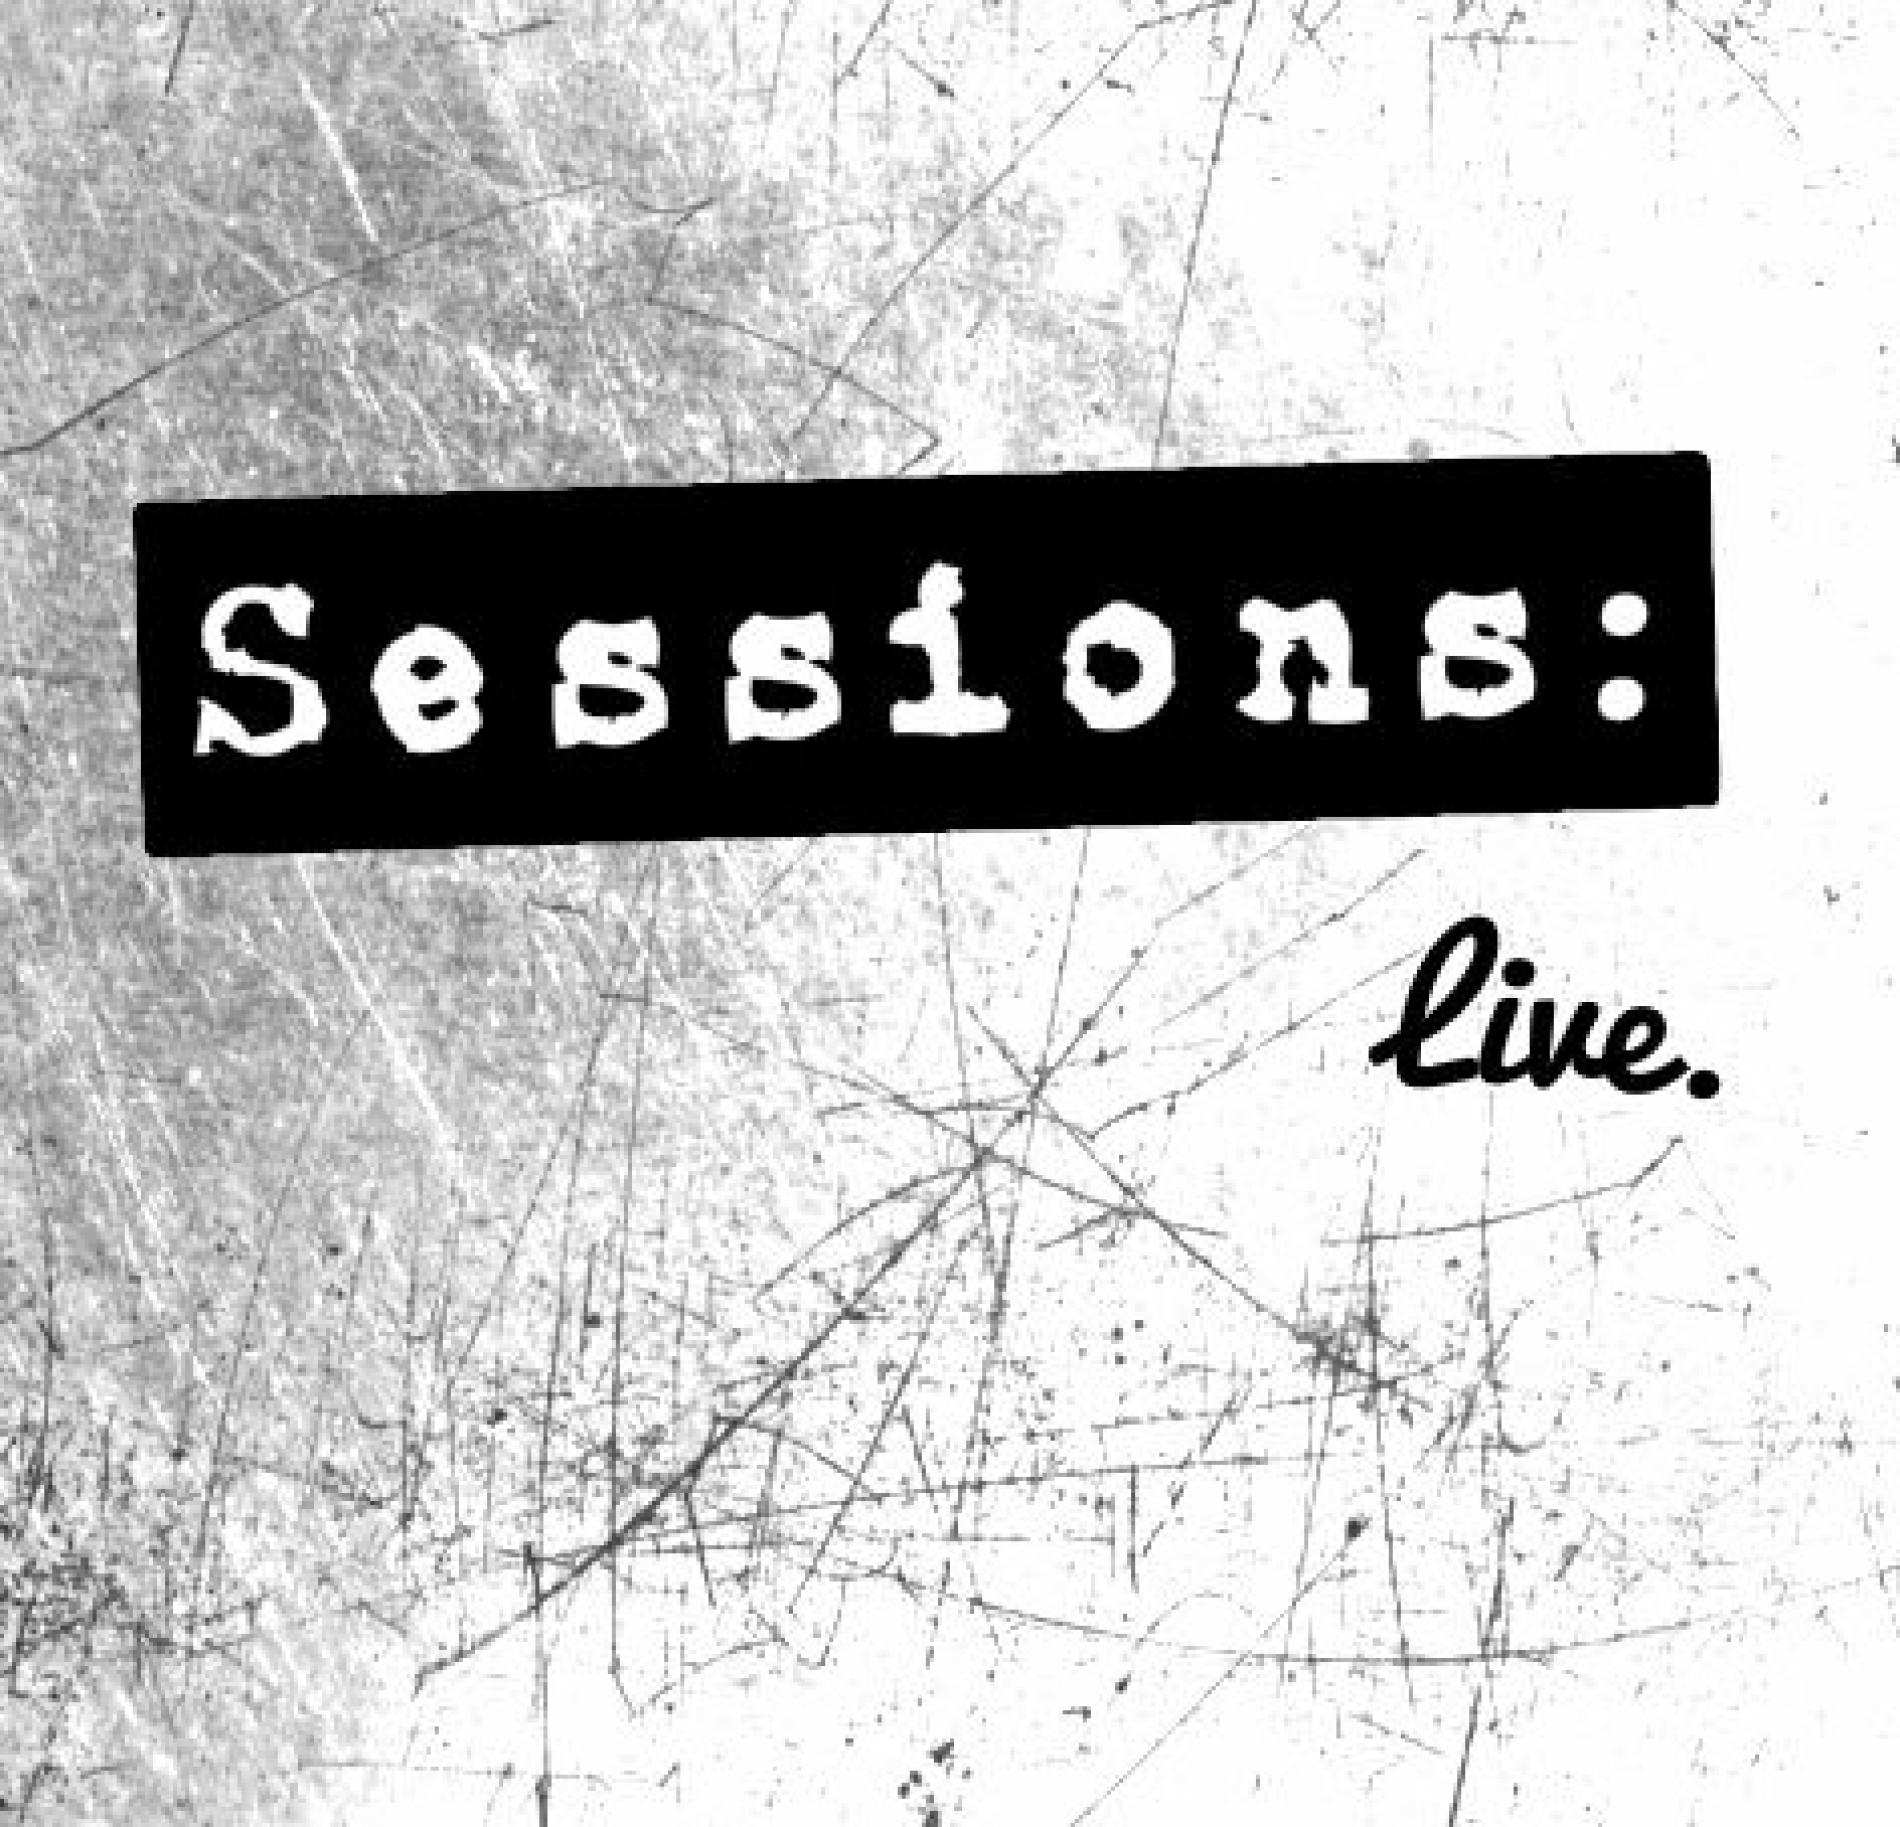 Sessions: Live